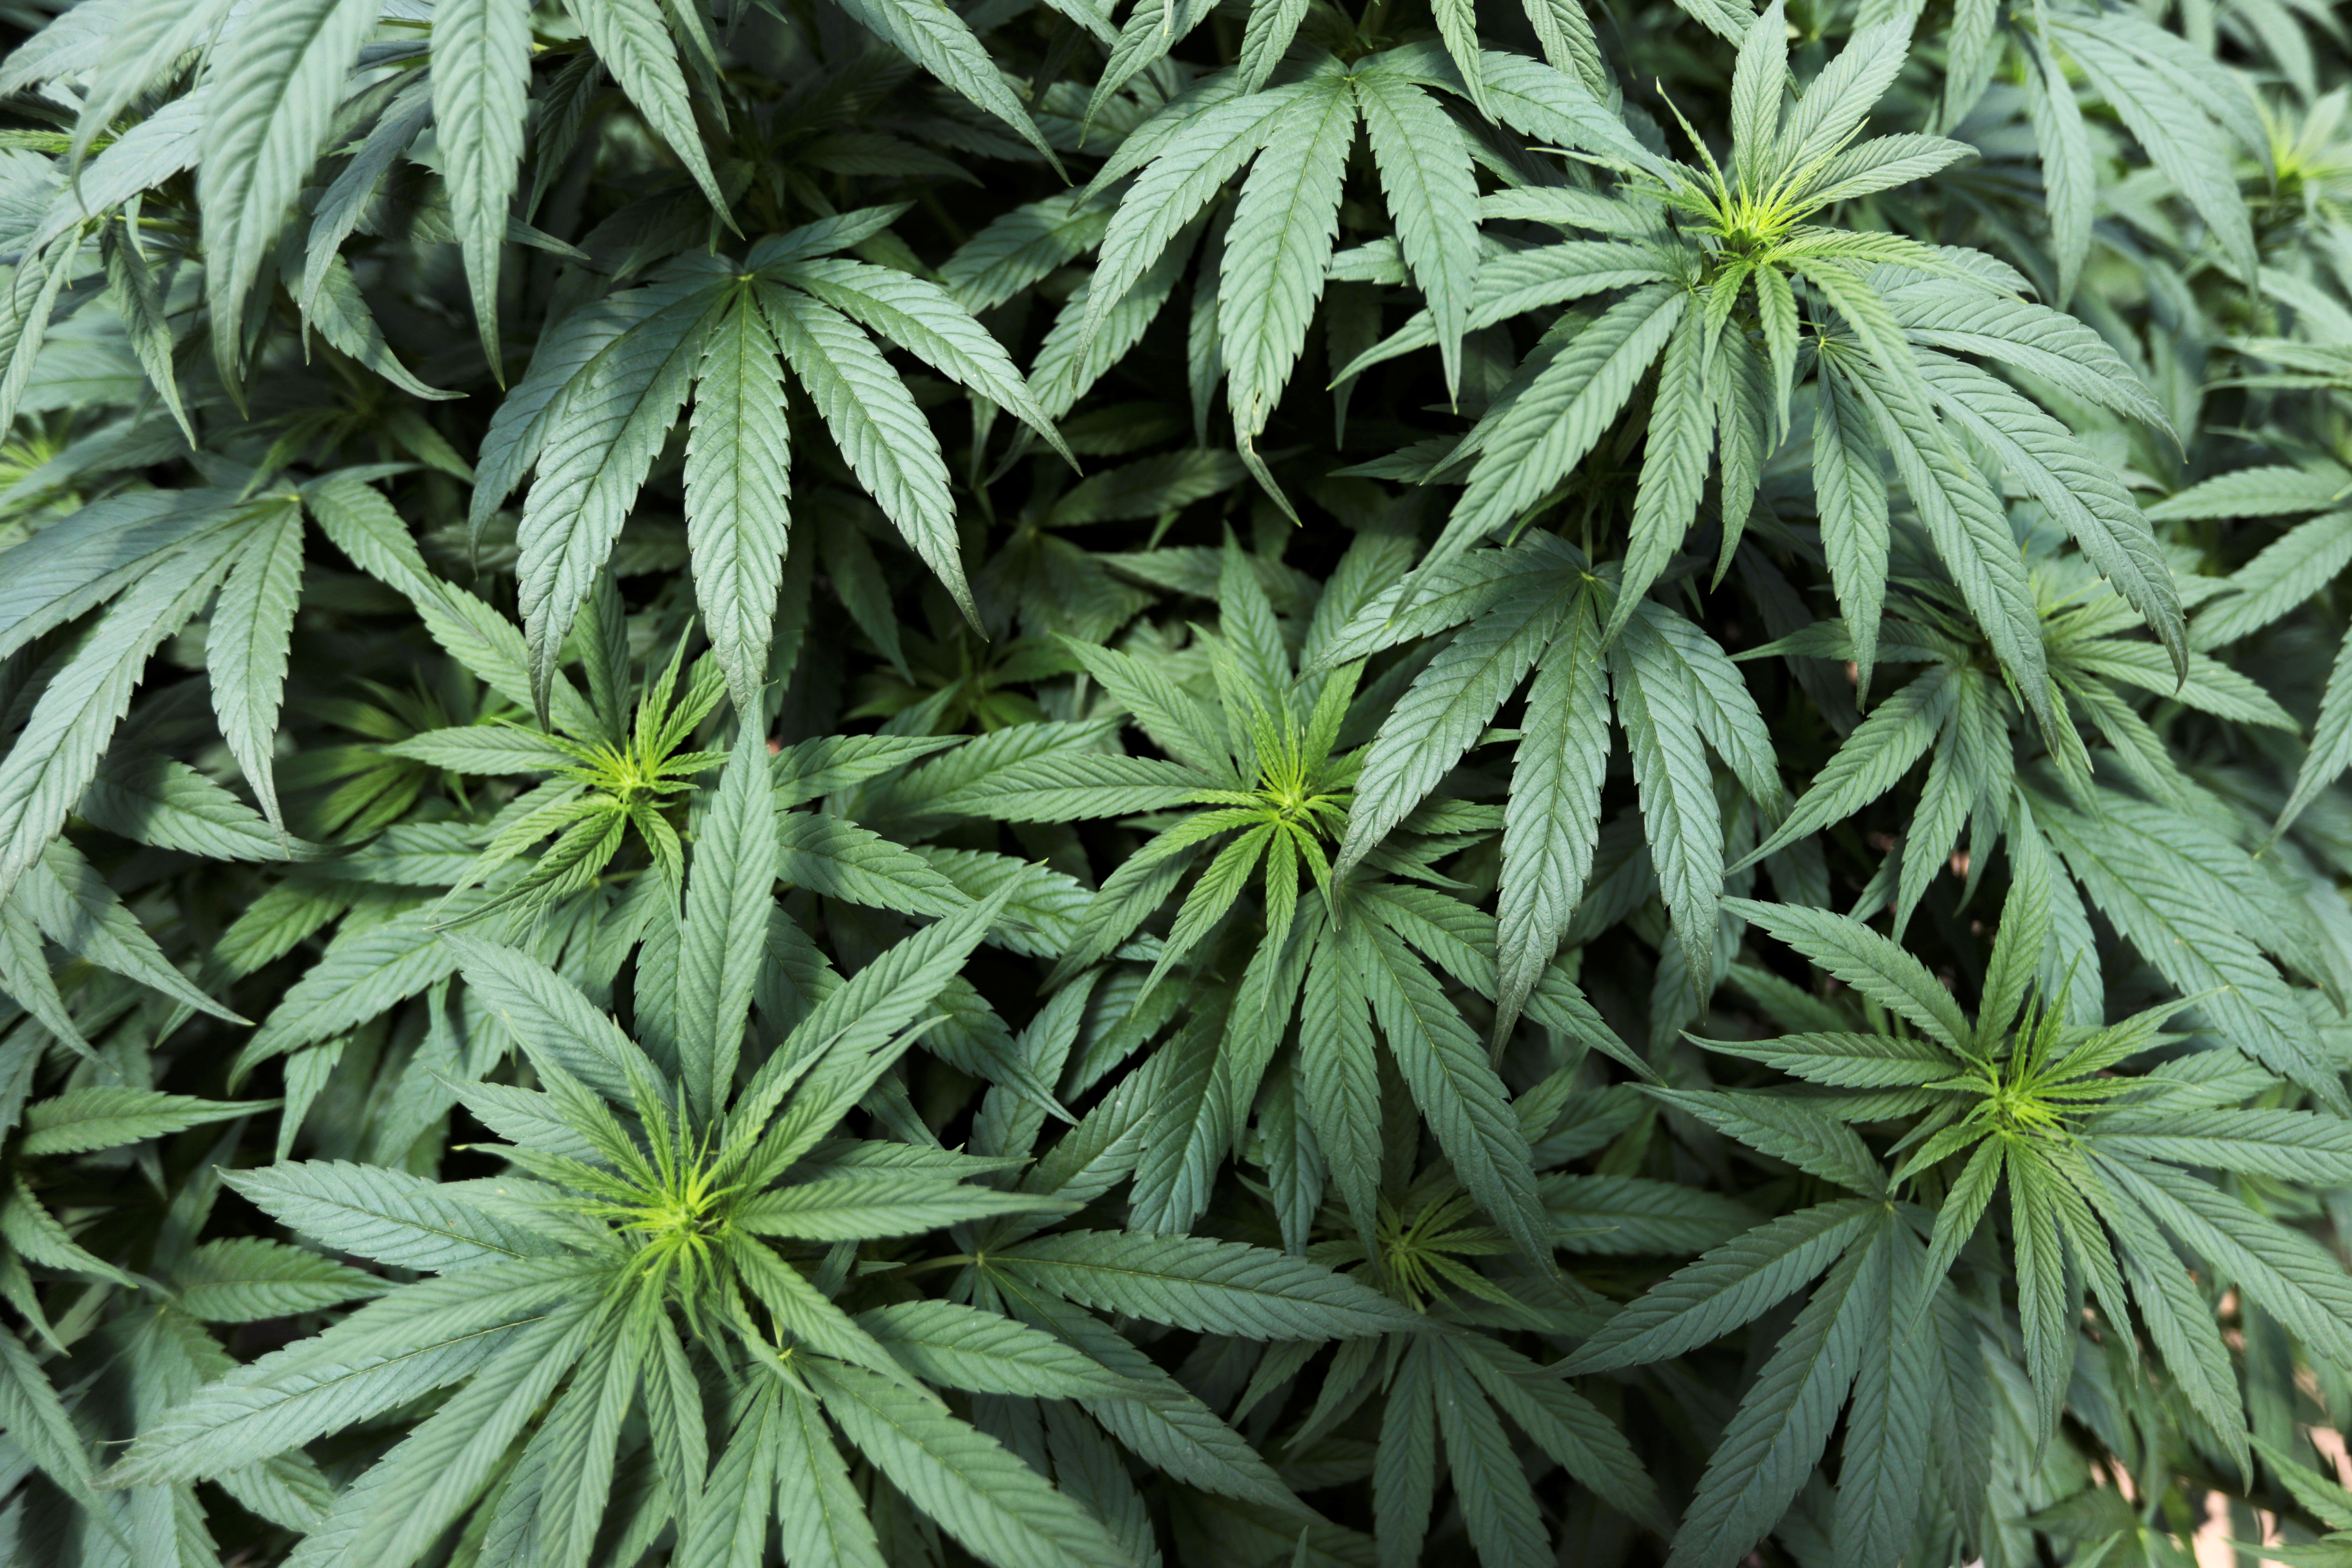 Cannabis plants are seen inside a greenhouse. REUTERS/Luisa Gonzalez